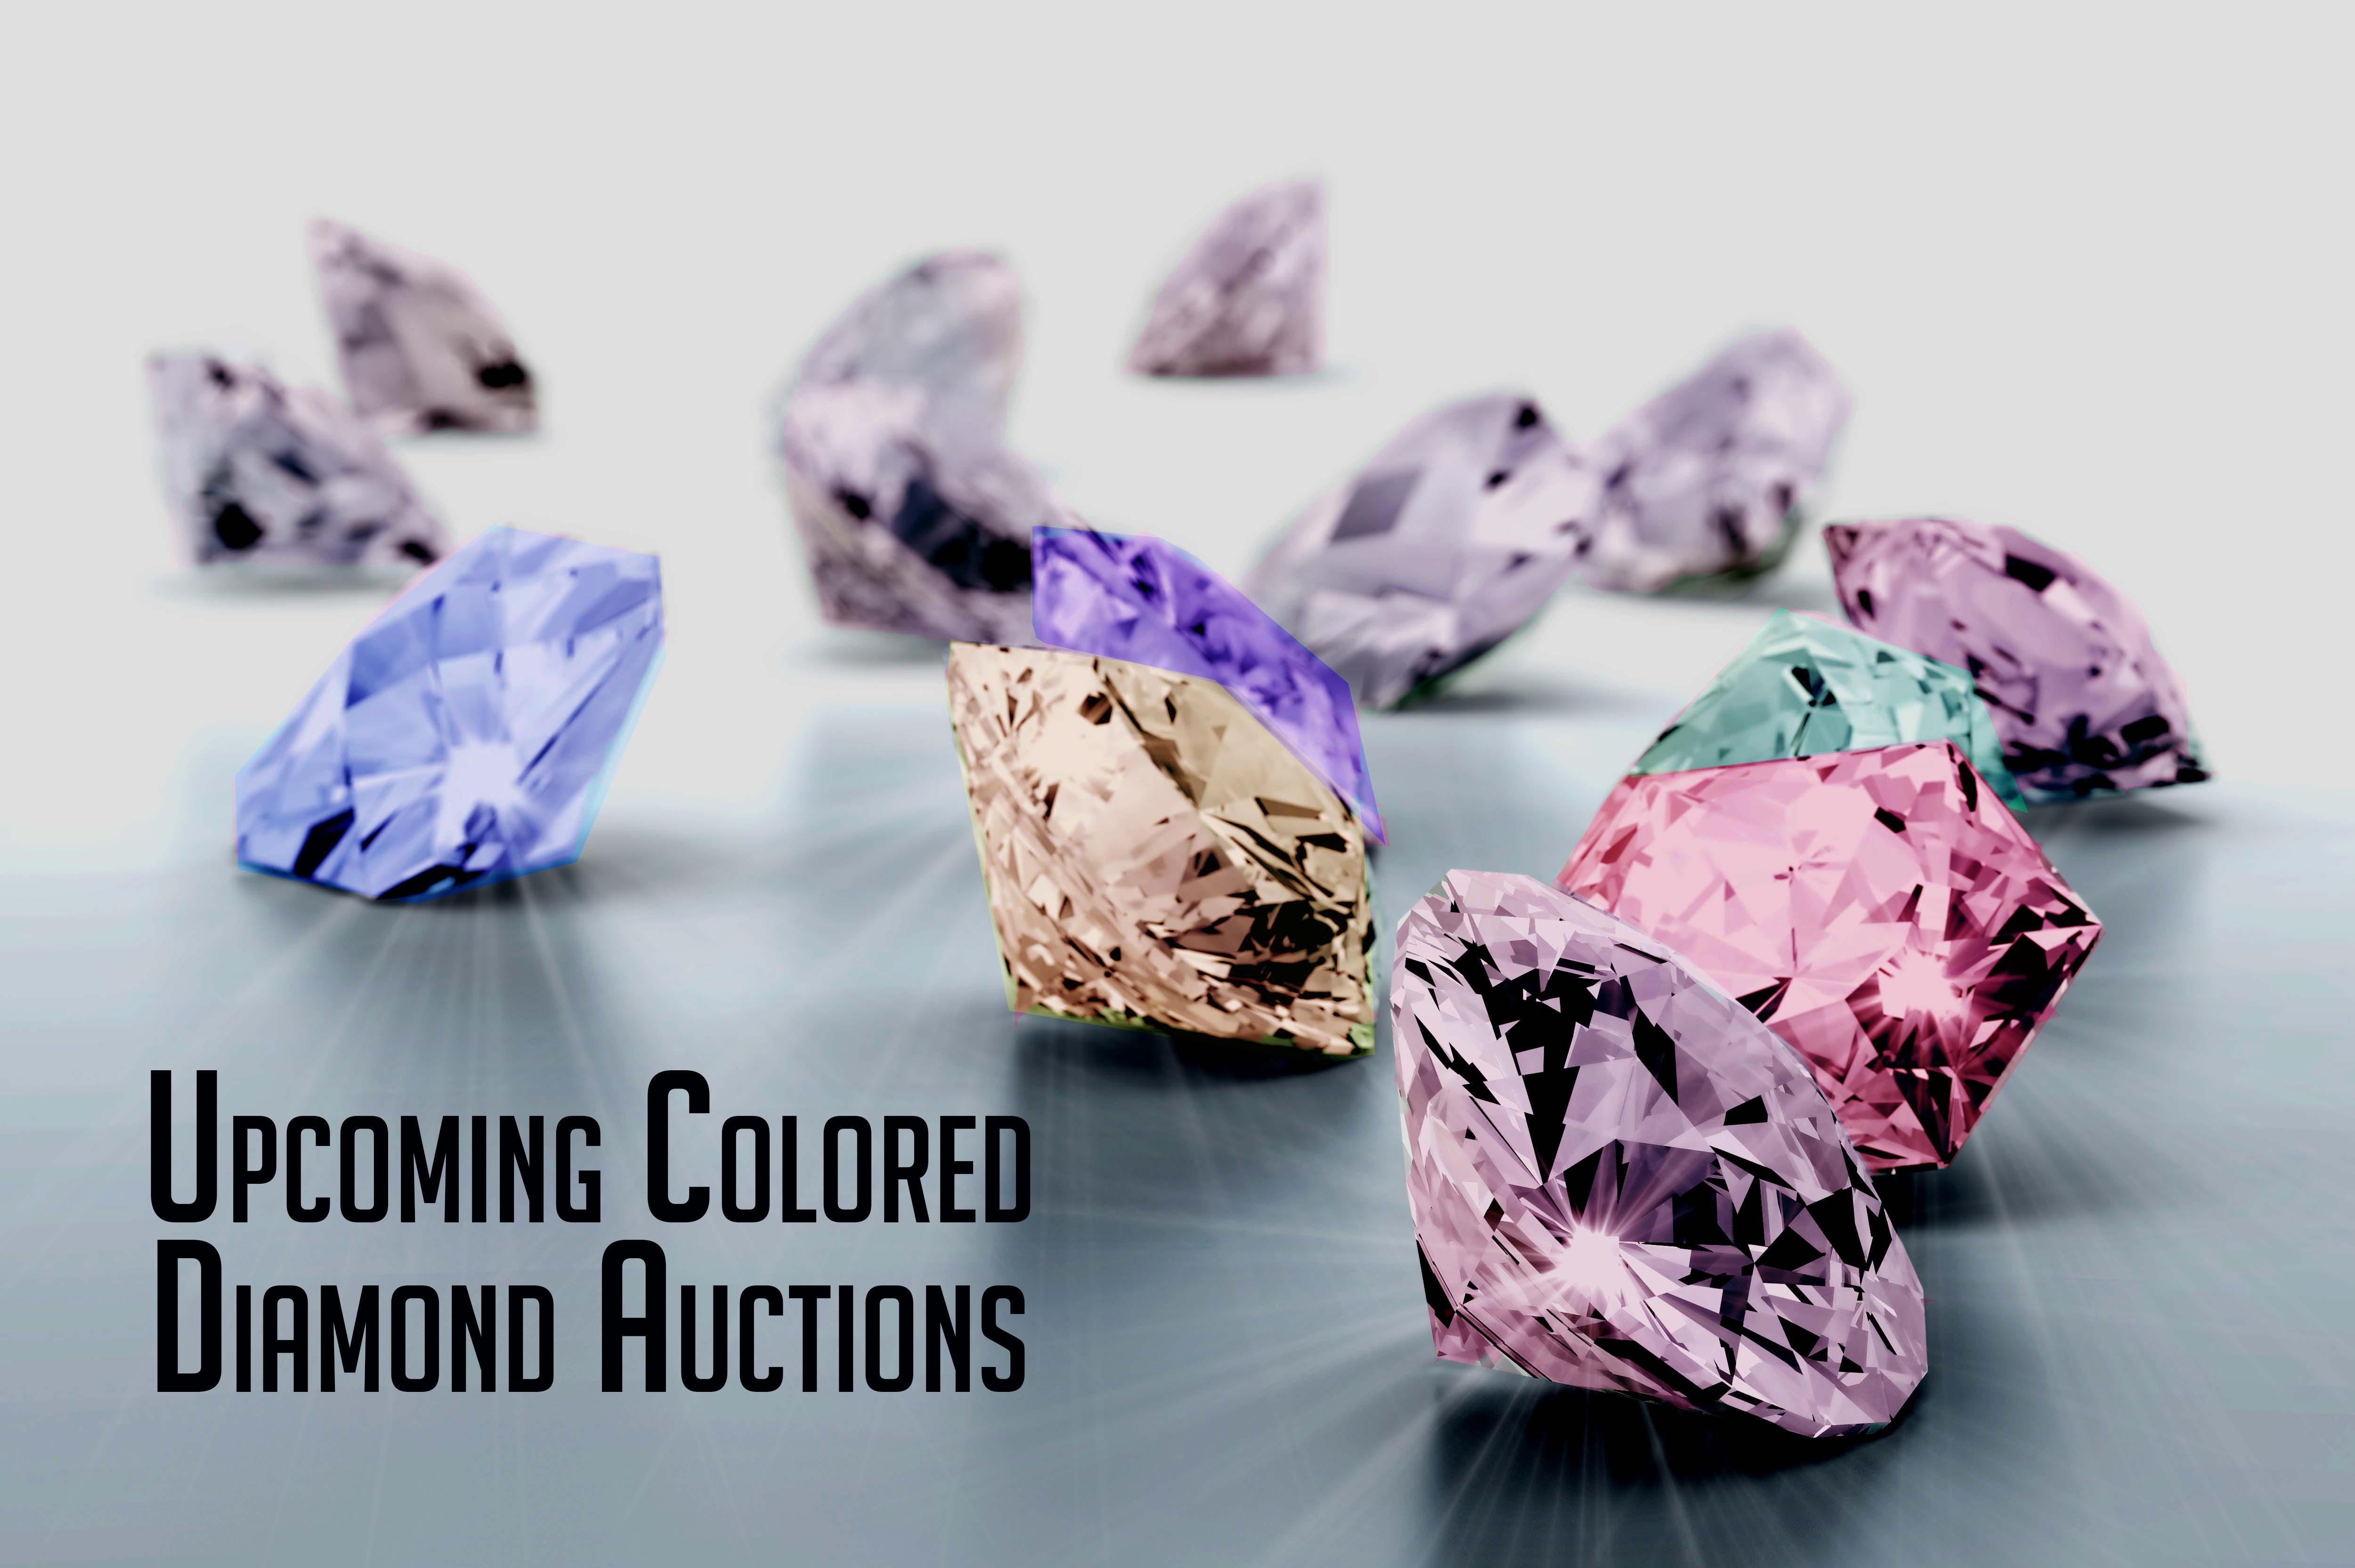 colored diamond auctions.jpg